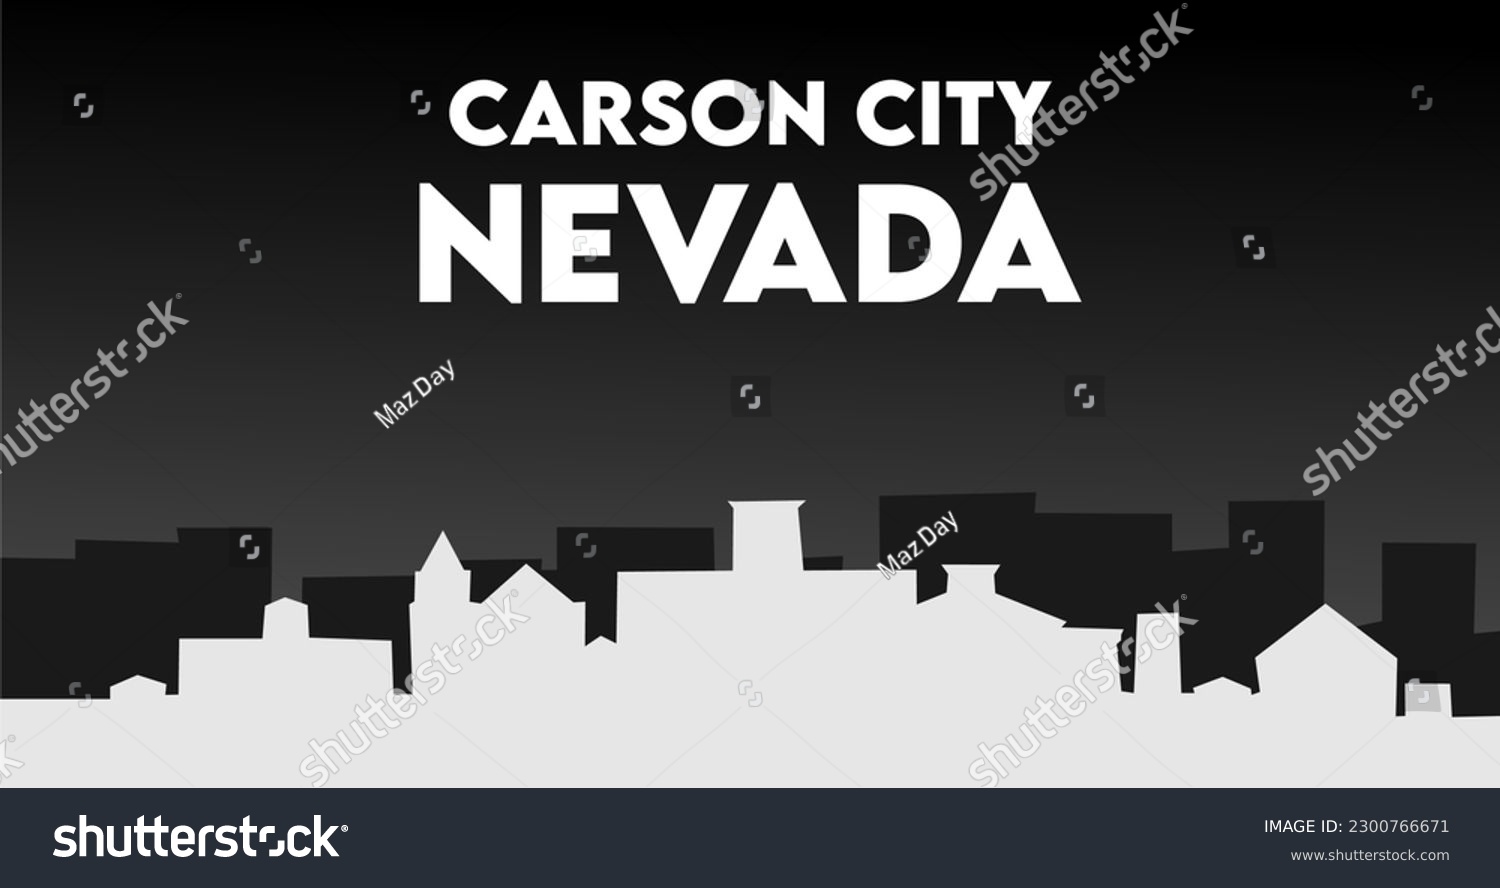 SVG of Carson City Nevada United States svg